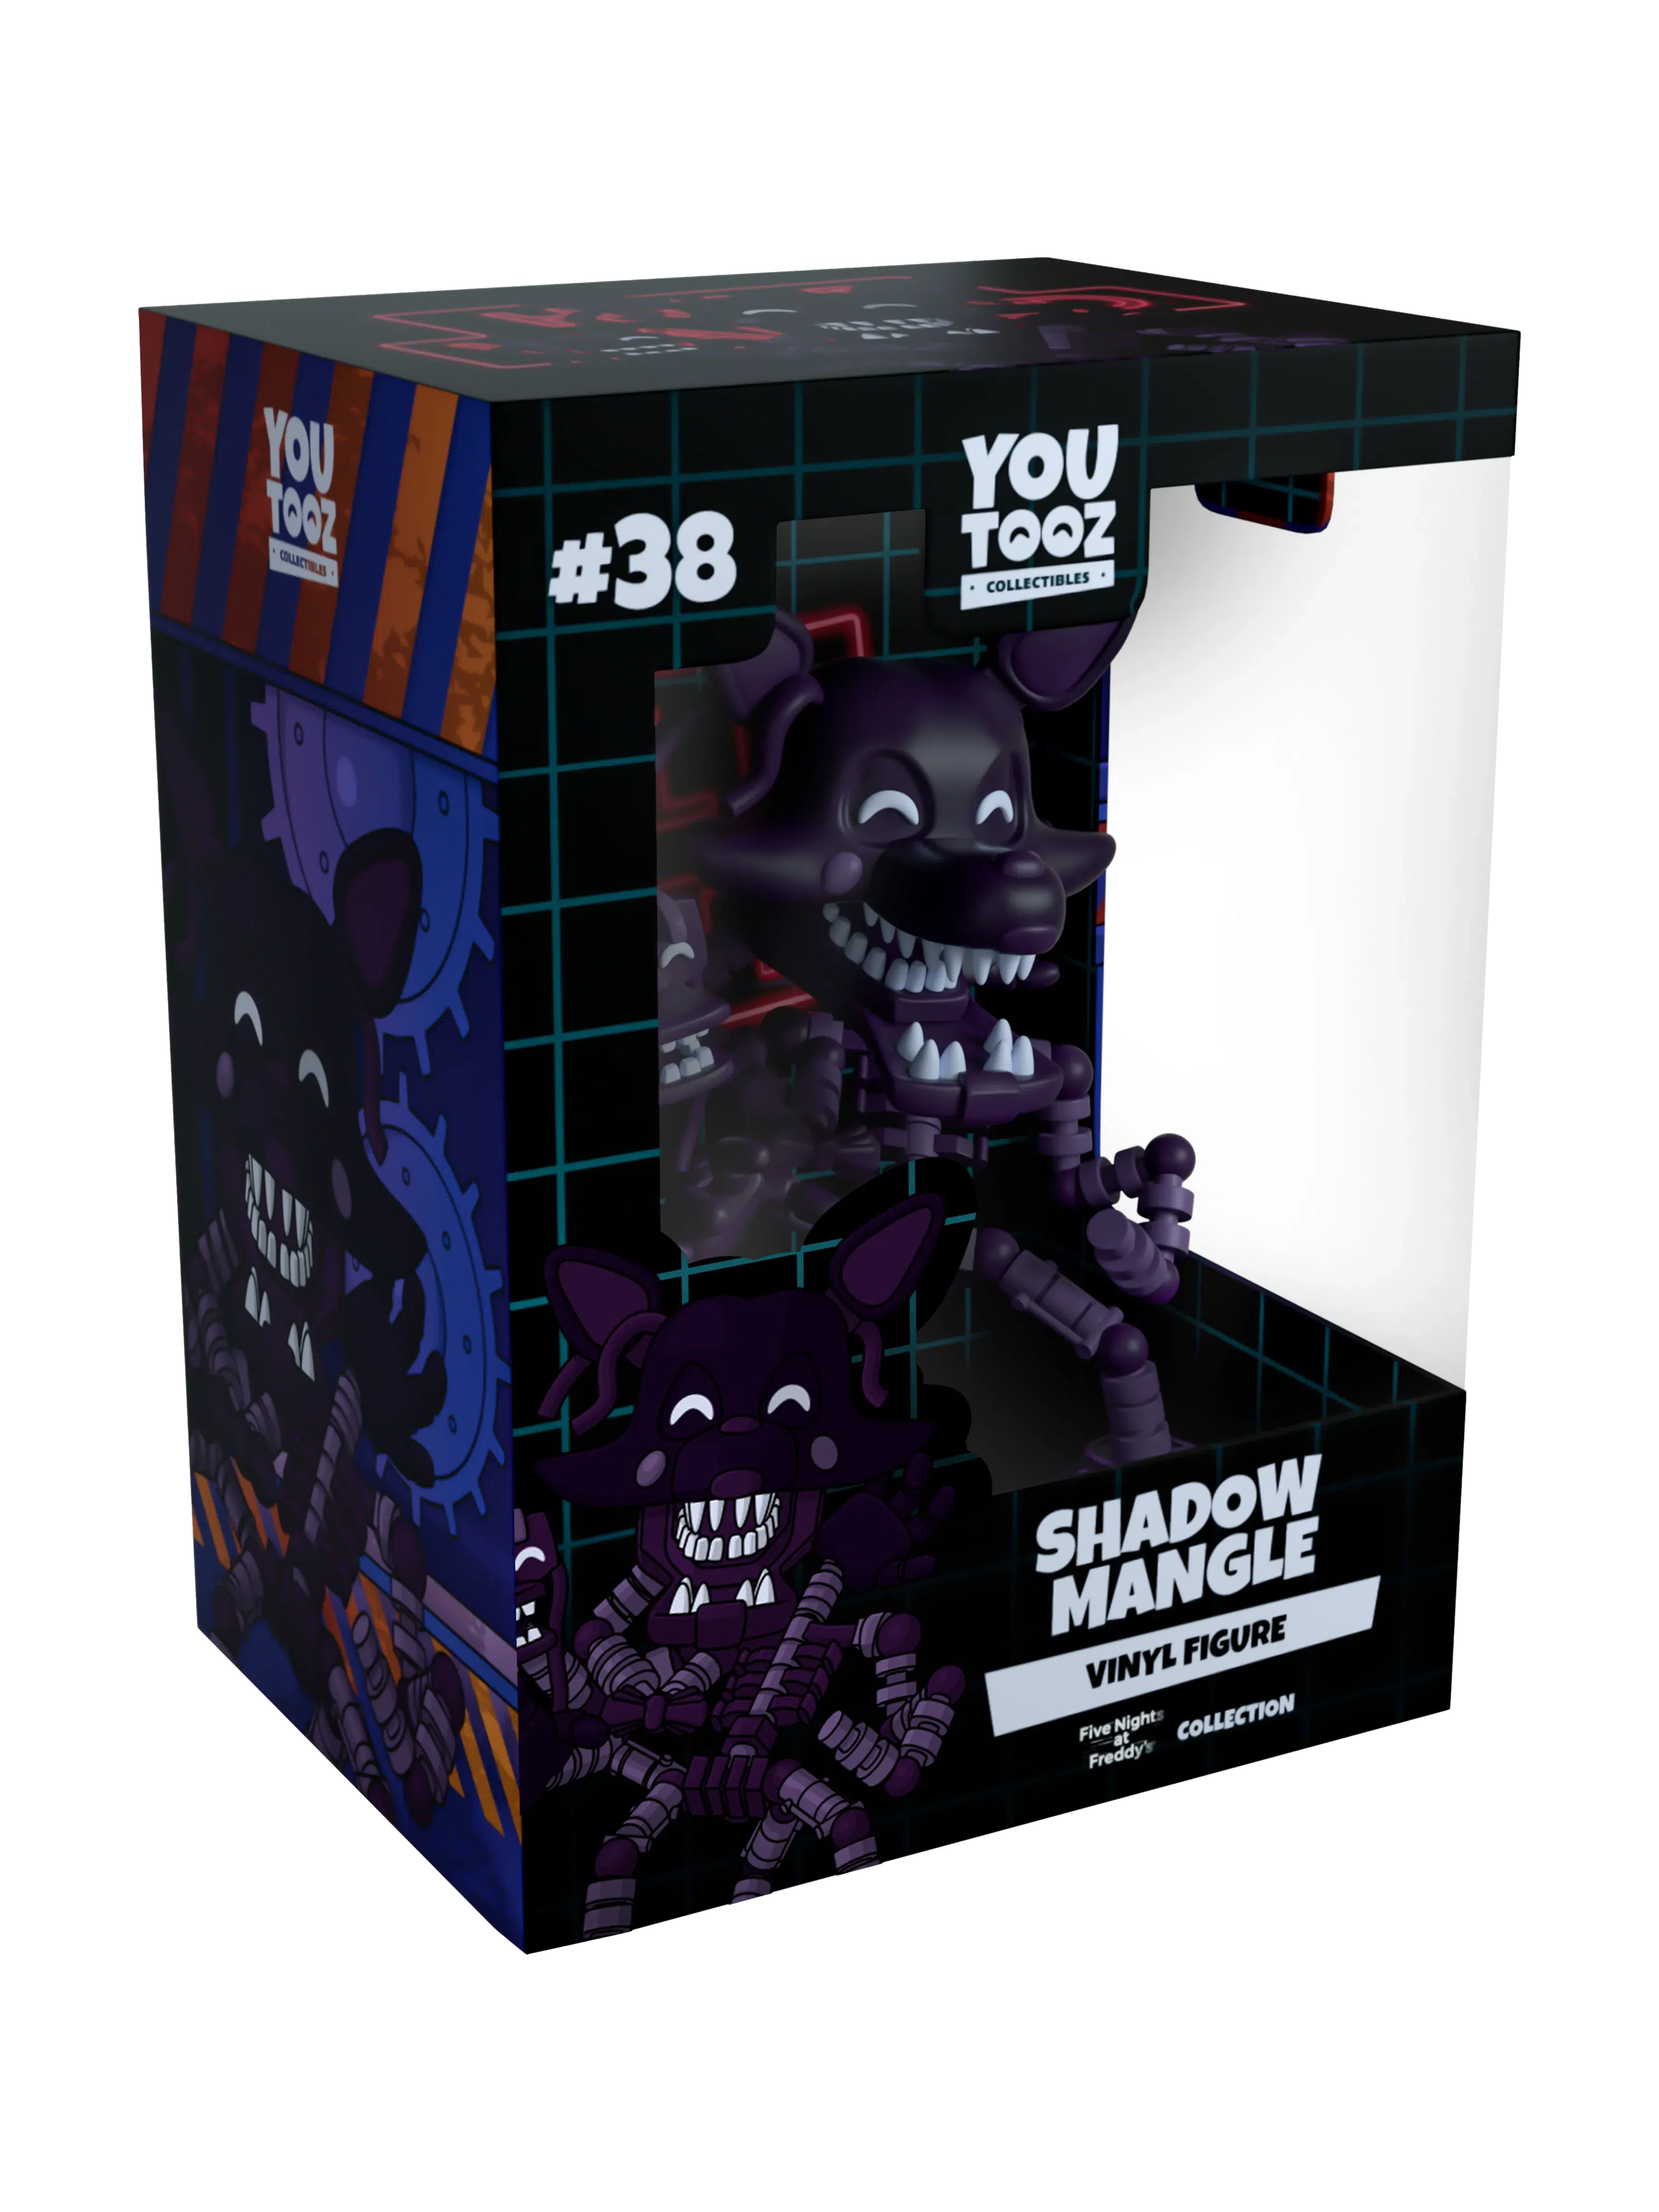 Five Nights at Freddy's: Shadow Mangle: #38 YouTooz